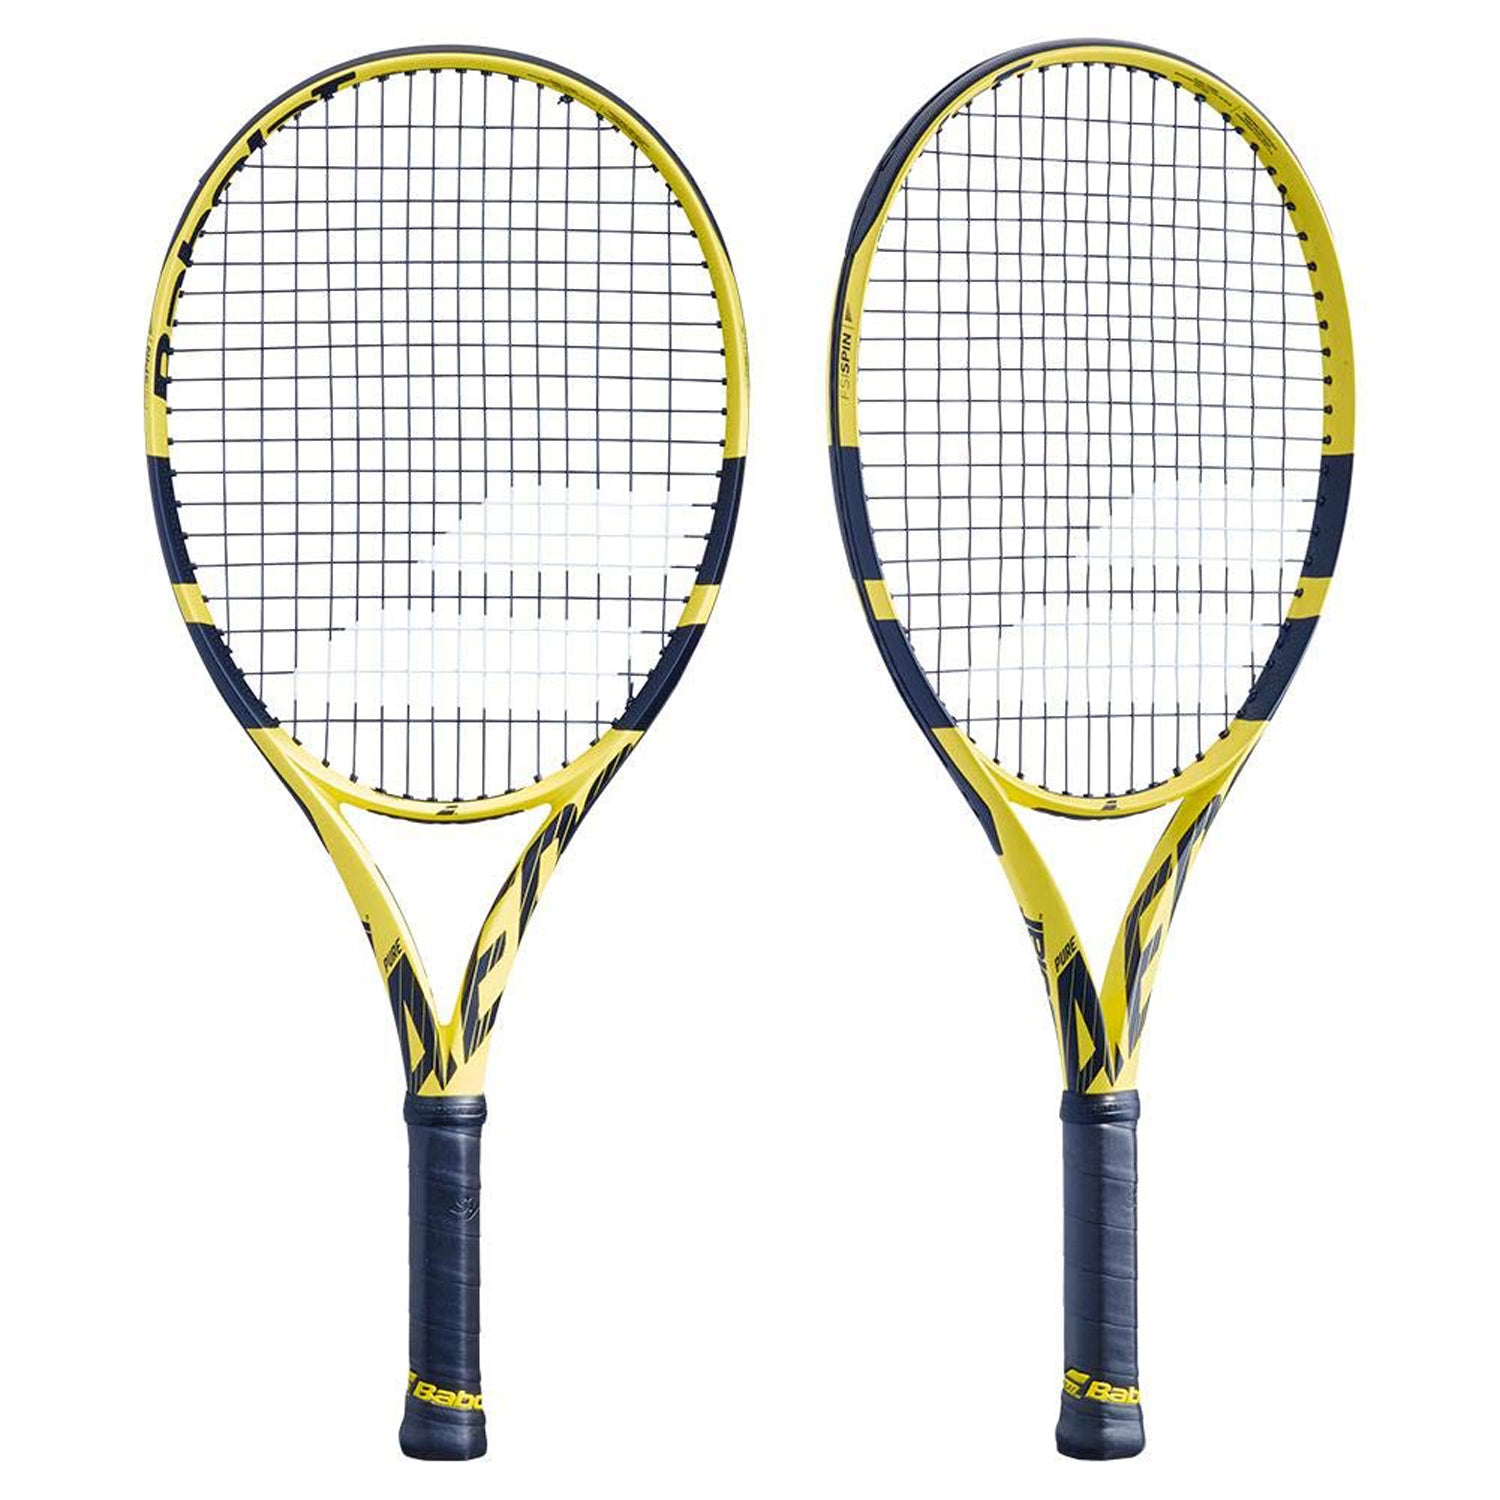 Babolat Pure Aero Junior 25 Tennis Racquet - Best Price online Prokicksports.com